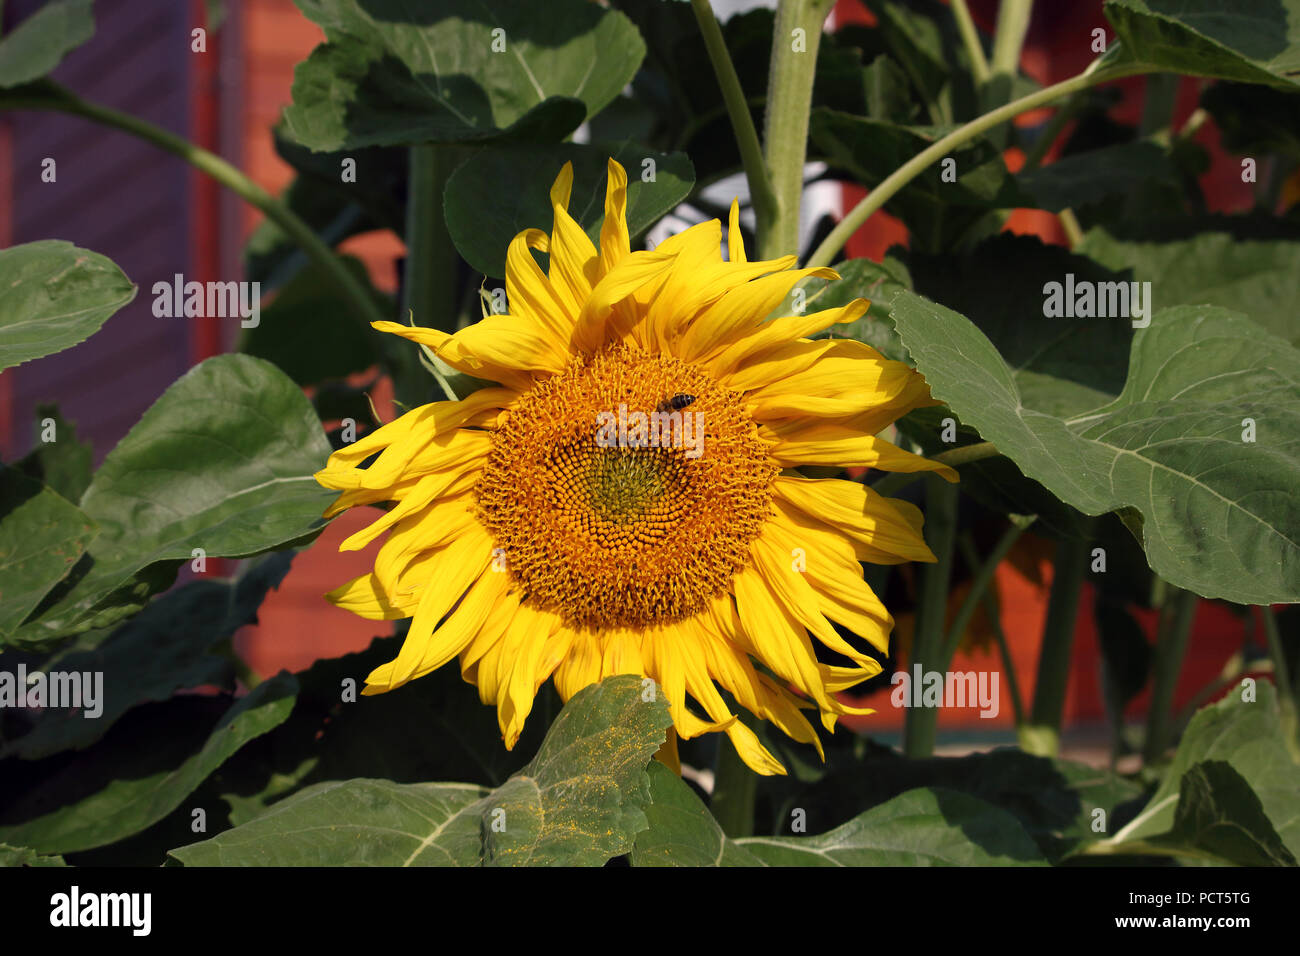 The bee gathers honey at sunflower photo Stock Photo